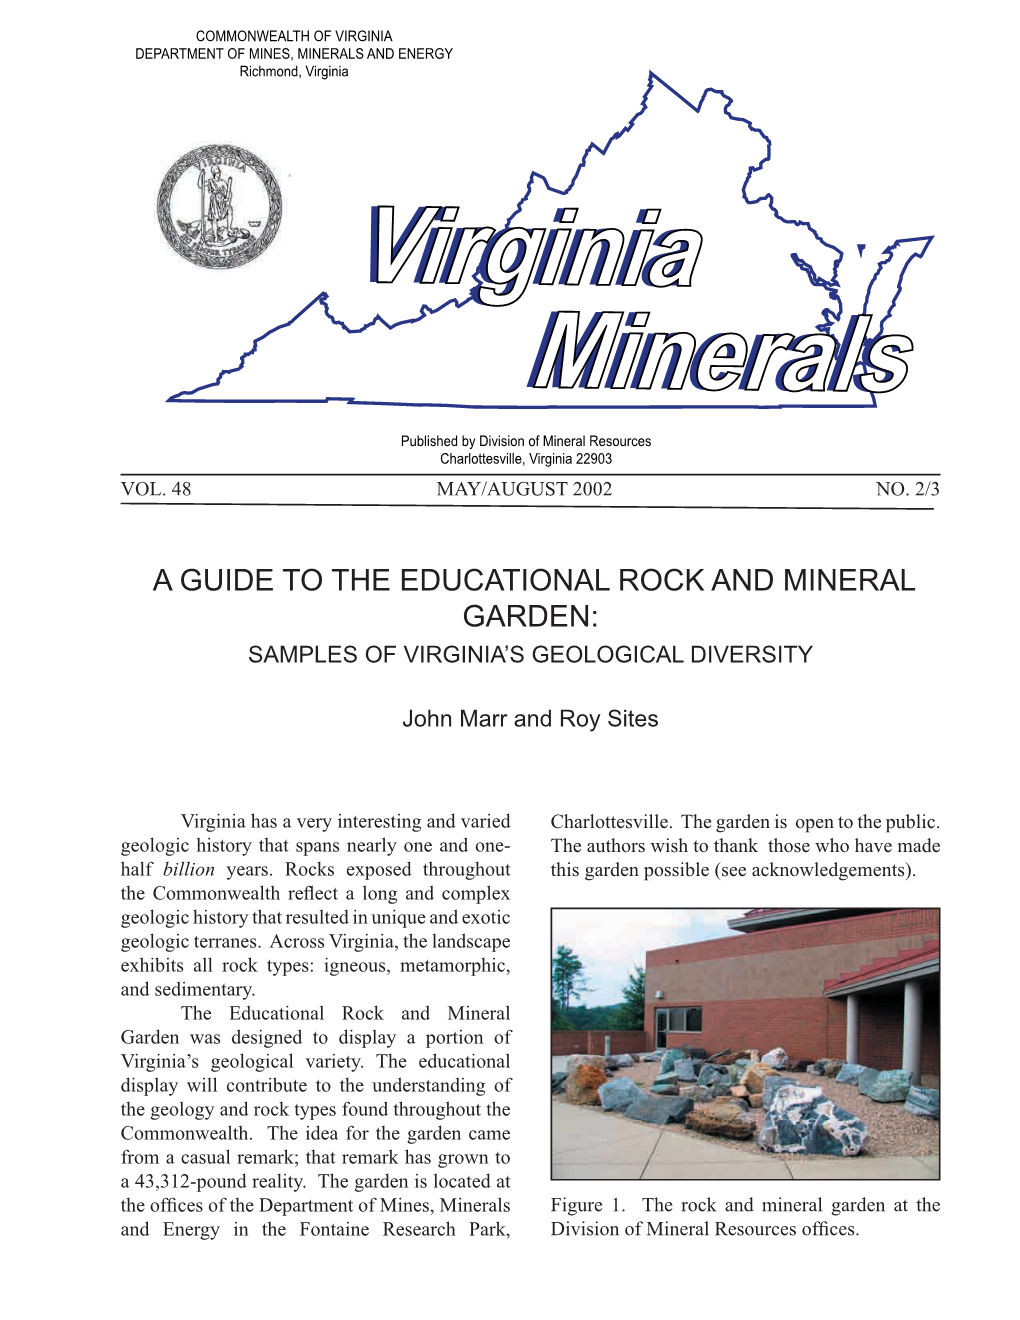 Minerals Virginia